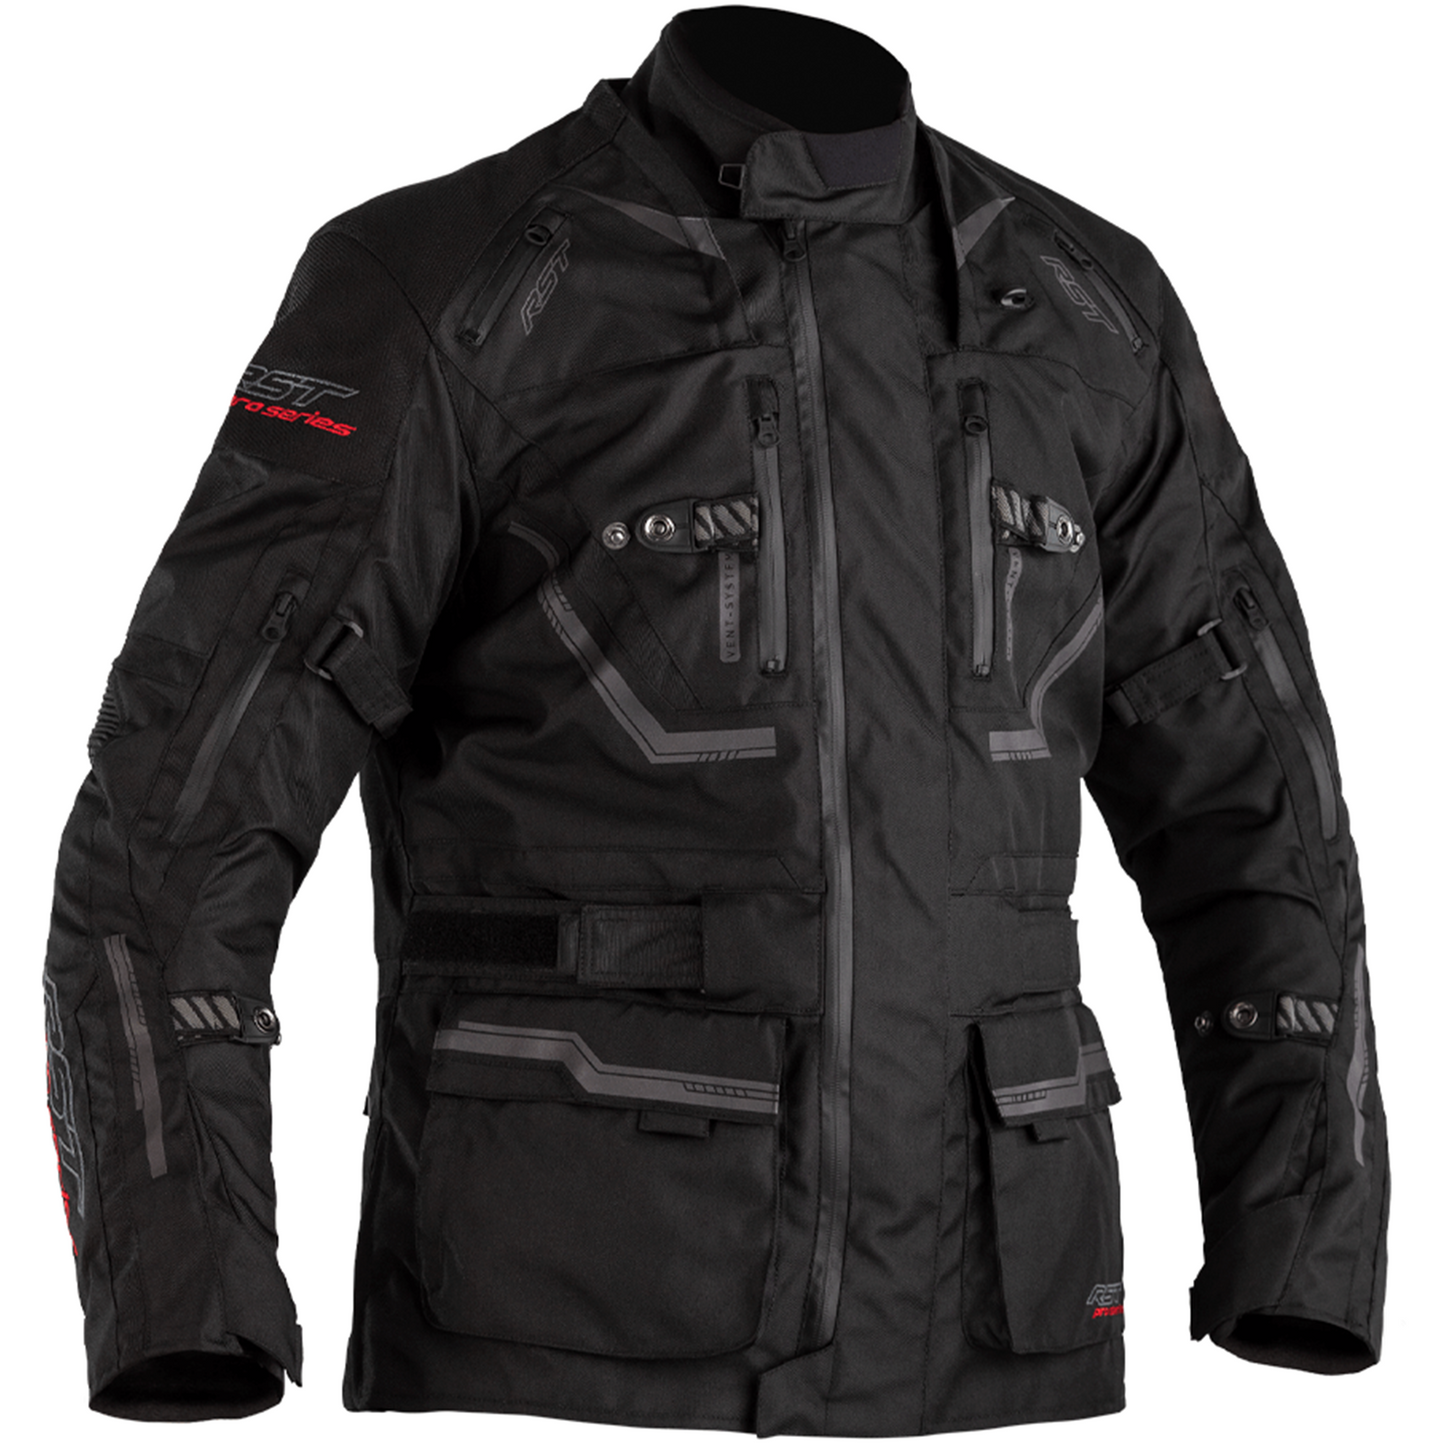 RST Pro Series Paragon 6 Textile Jacket - Black